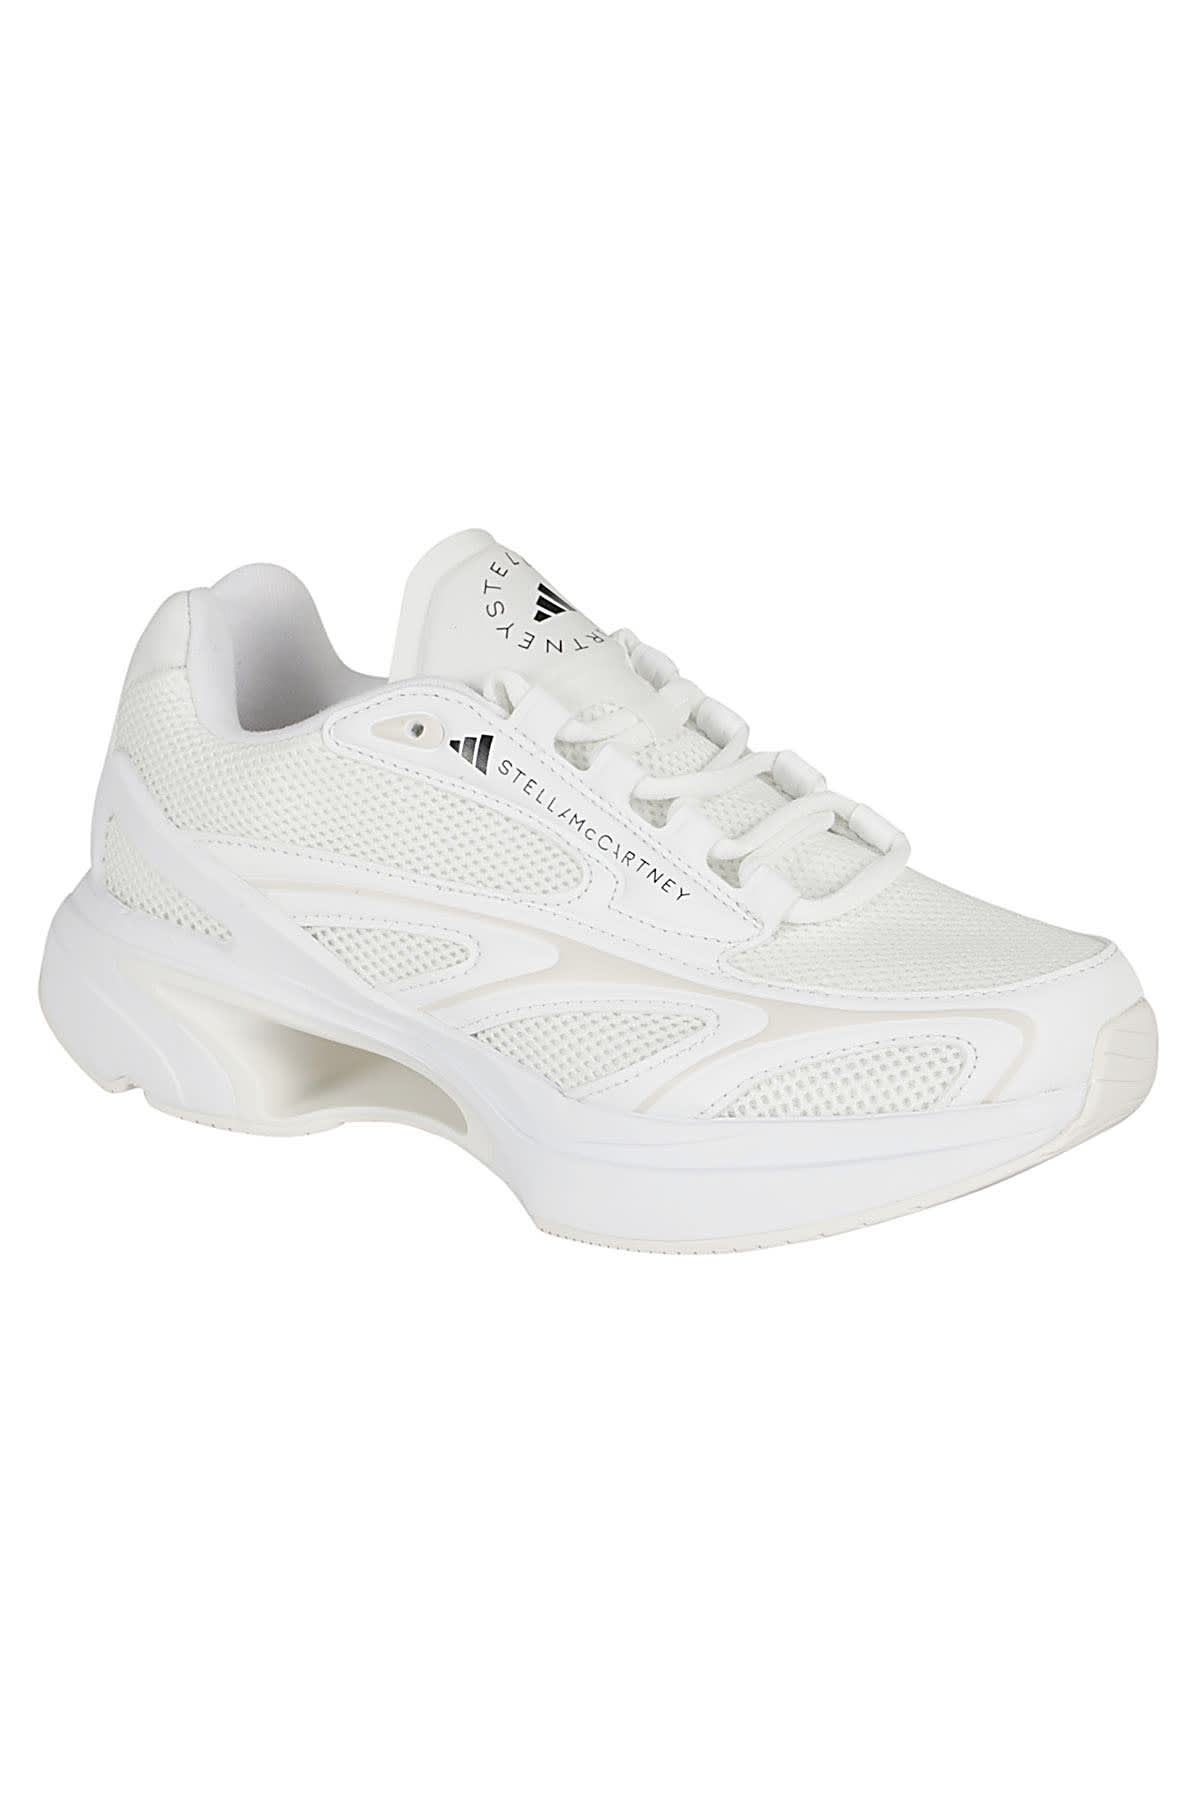 Shop Adidas By Stella Mccartney Sports Wear In White